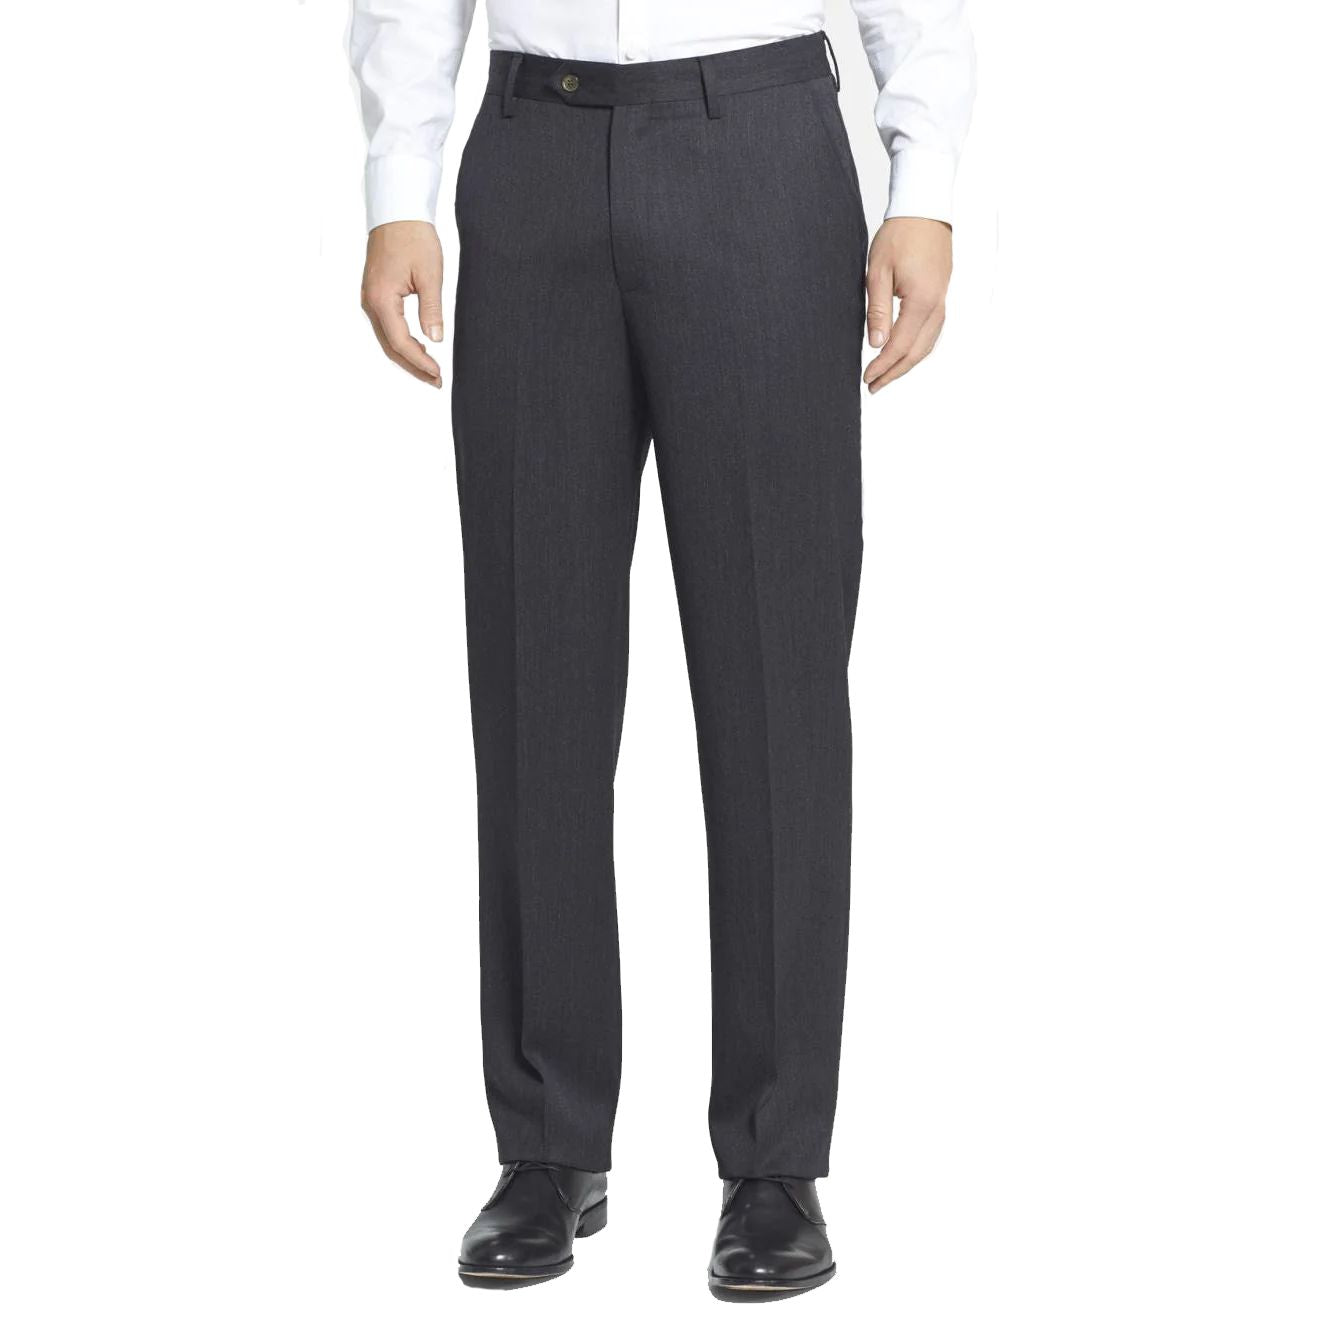 Super 100s Worsted Wool Gabardine Trouser in Medium Grey (Hampton Traditional Fit - Regular & Long Rise) by Berle